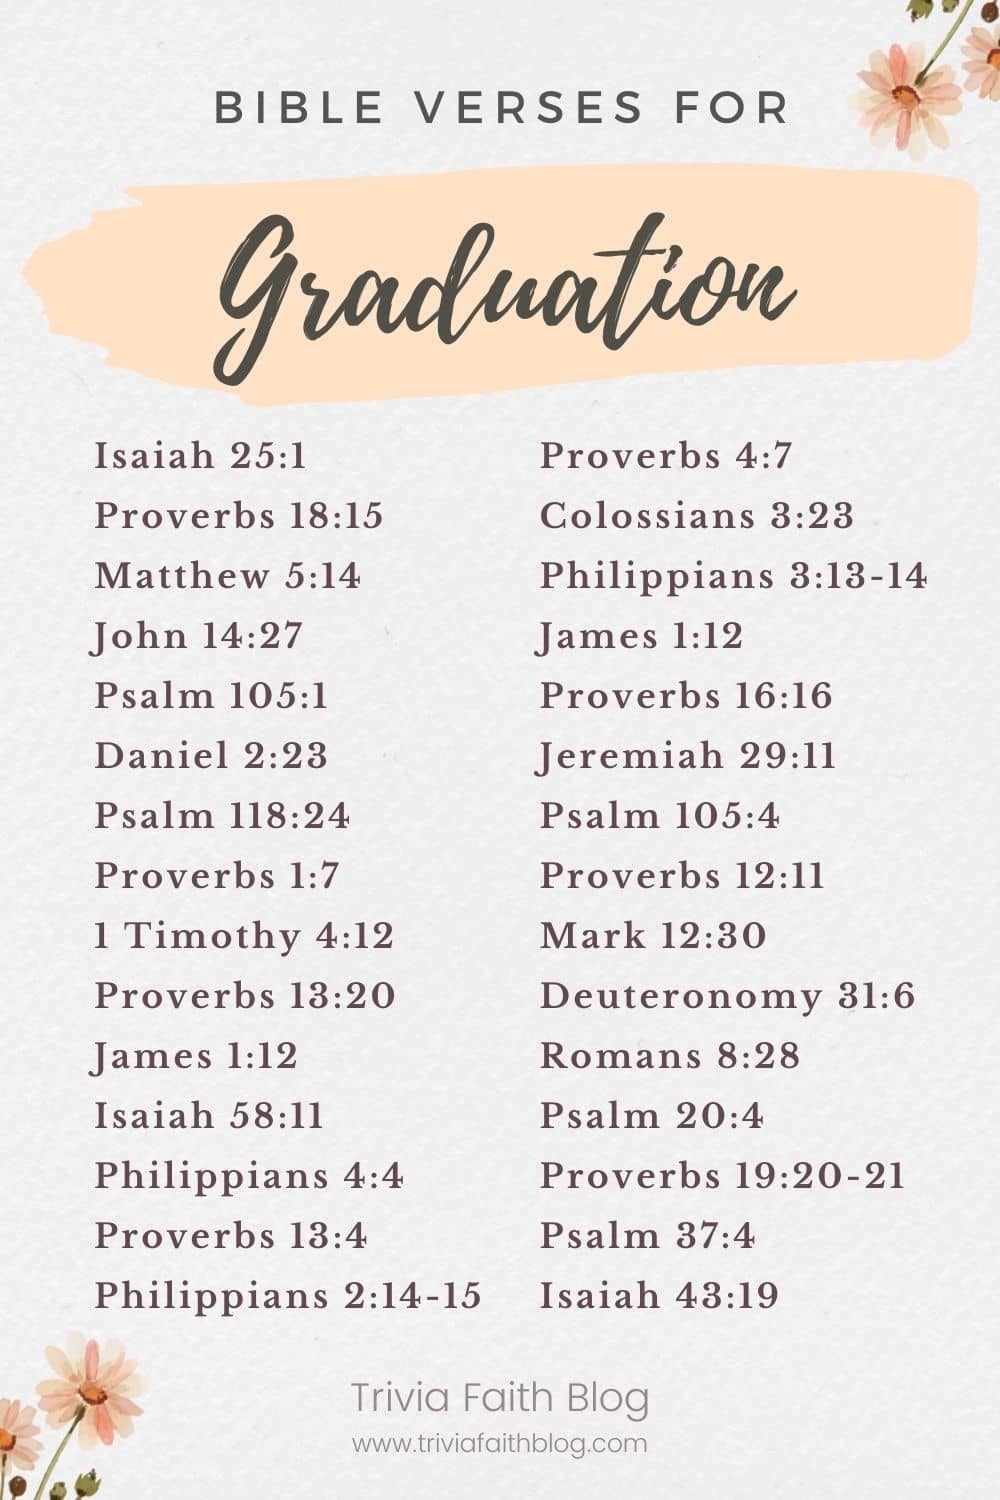 Bible verses about graduation